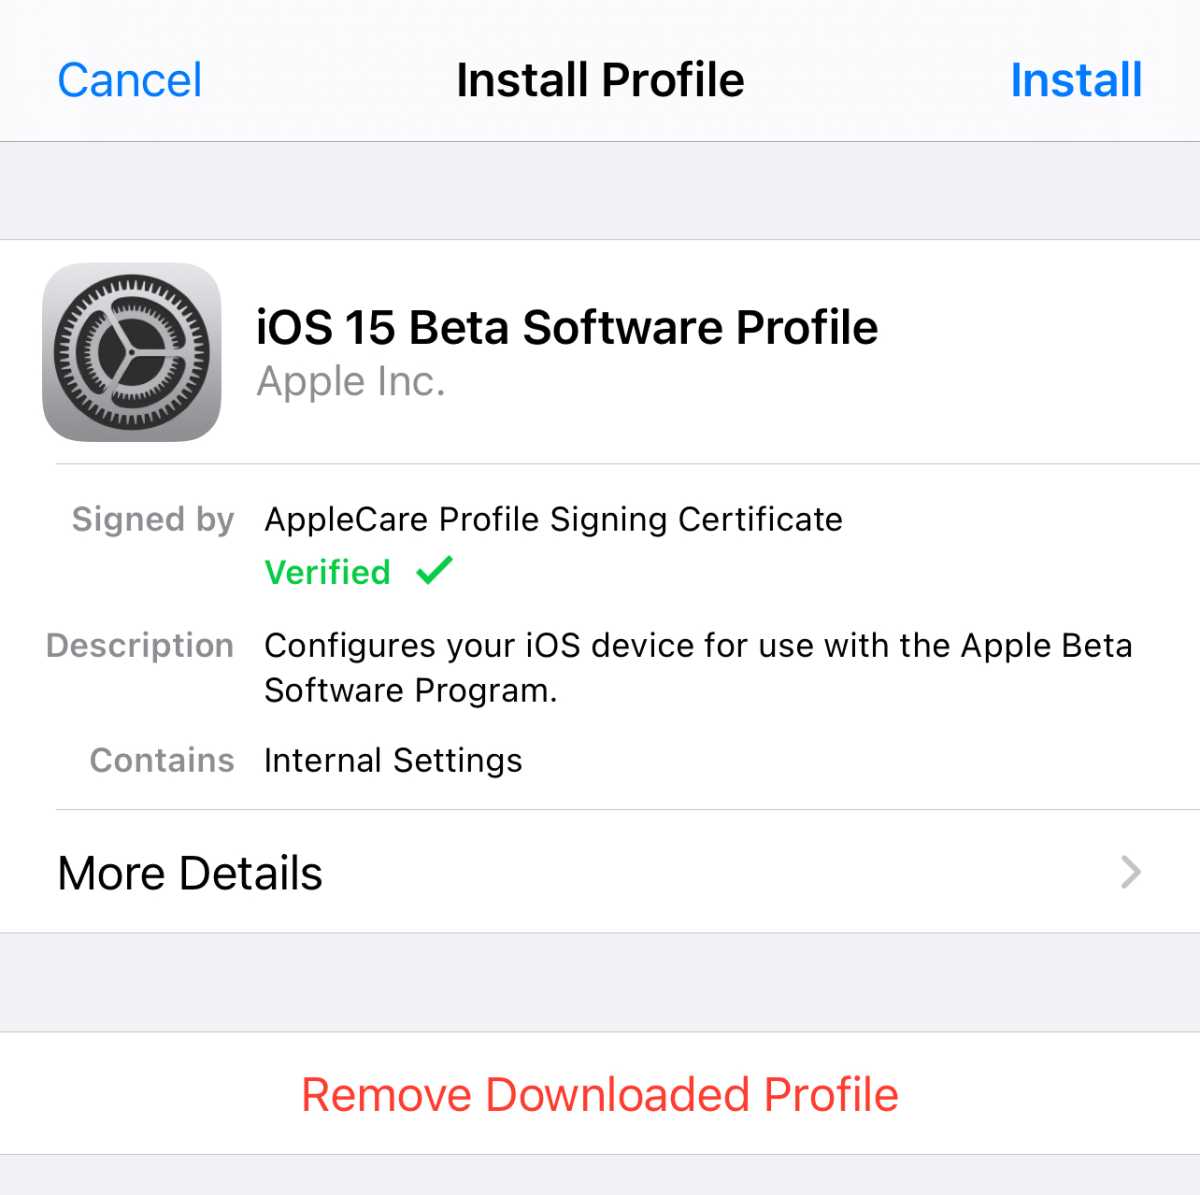 Ios 15 beta profile download